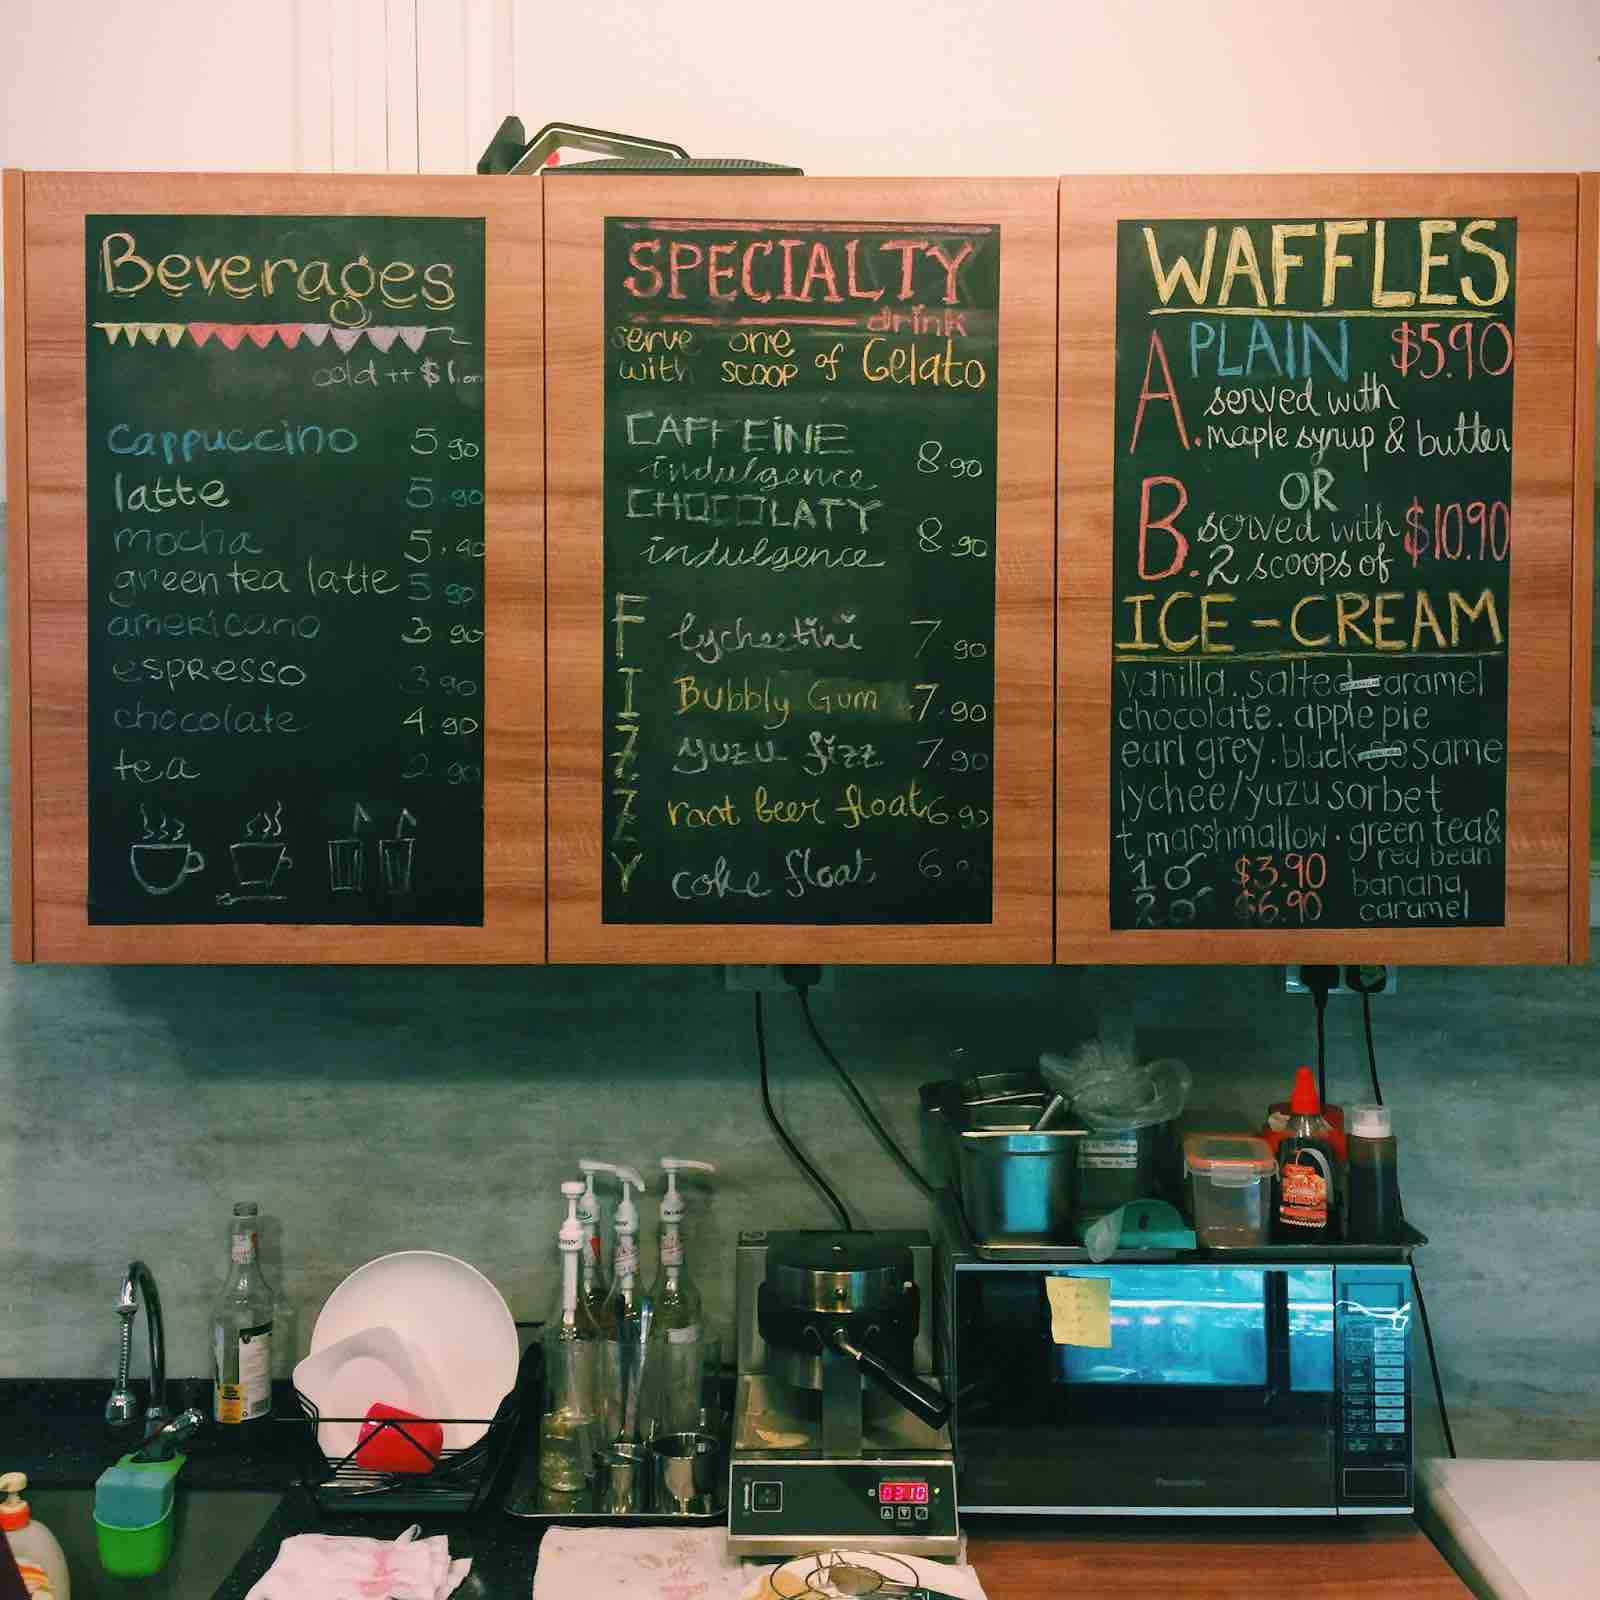 Cravings Cafe Singapore - AspirantSG